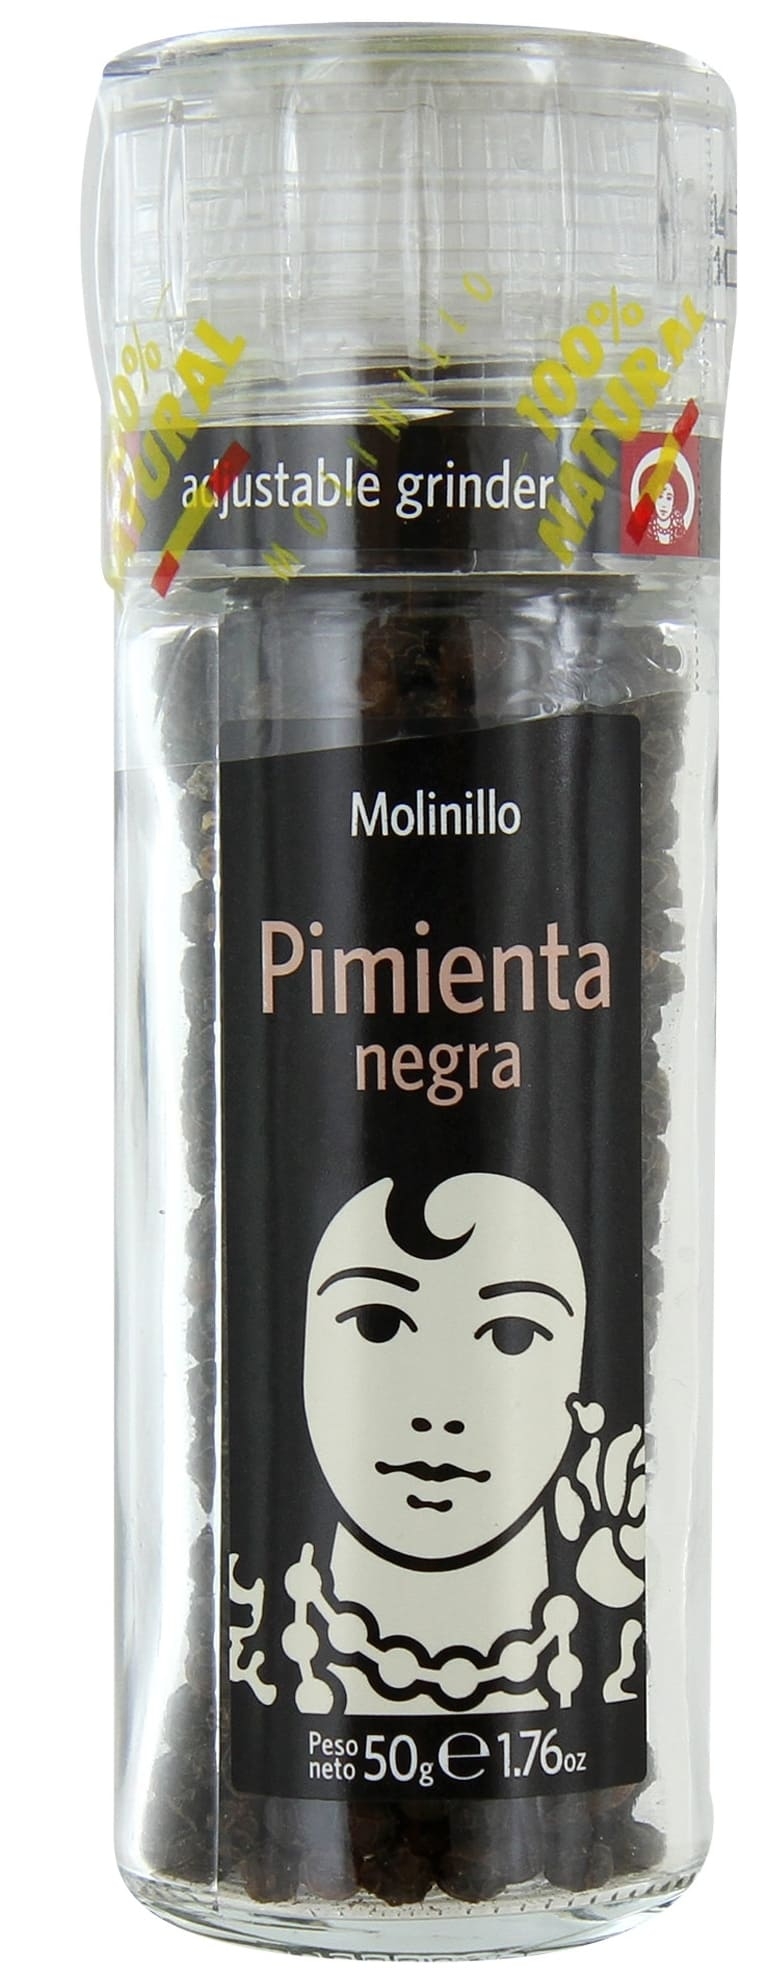 Molinillo Pimienta Negra Carmencita - Home Sentry